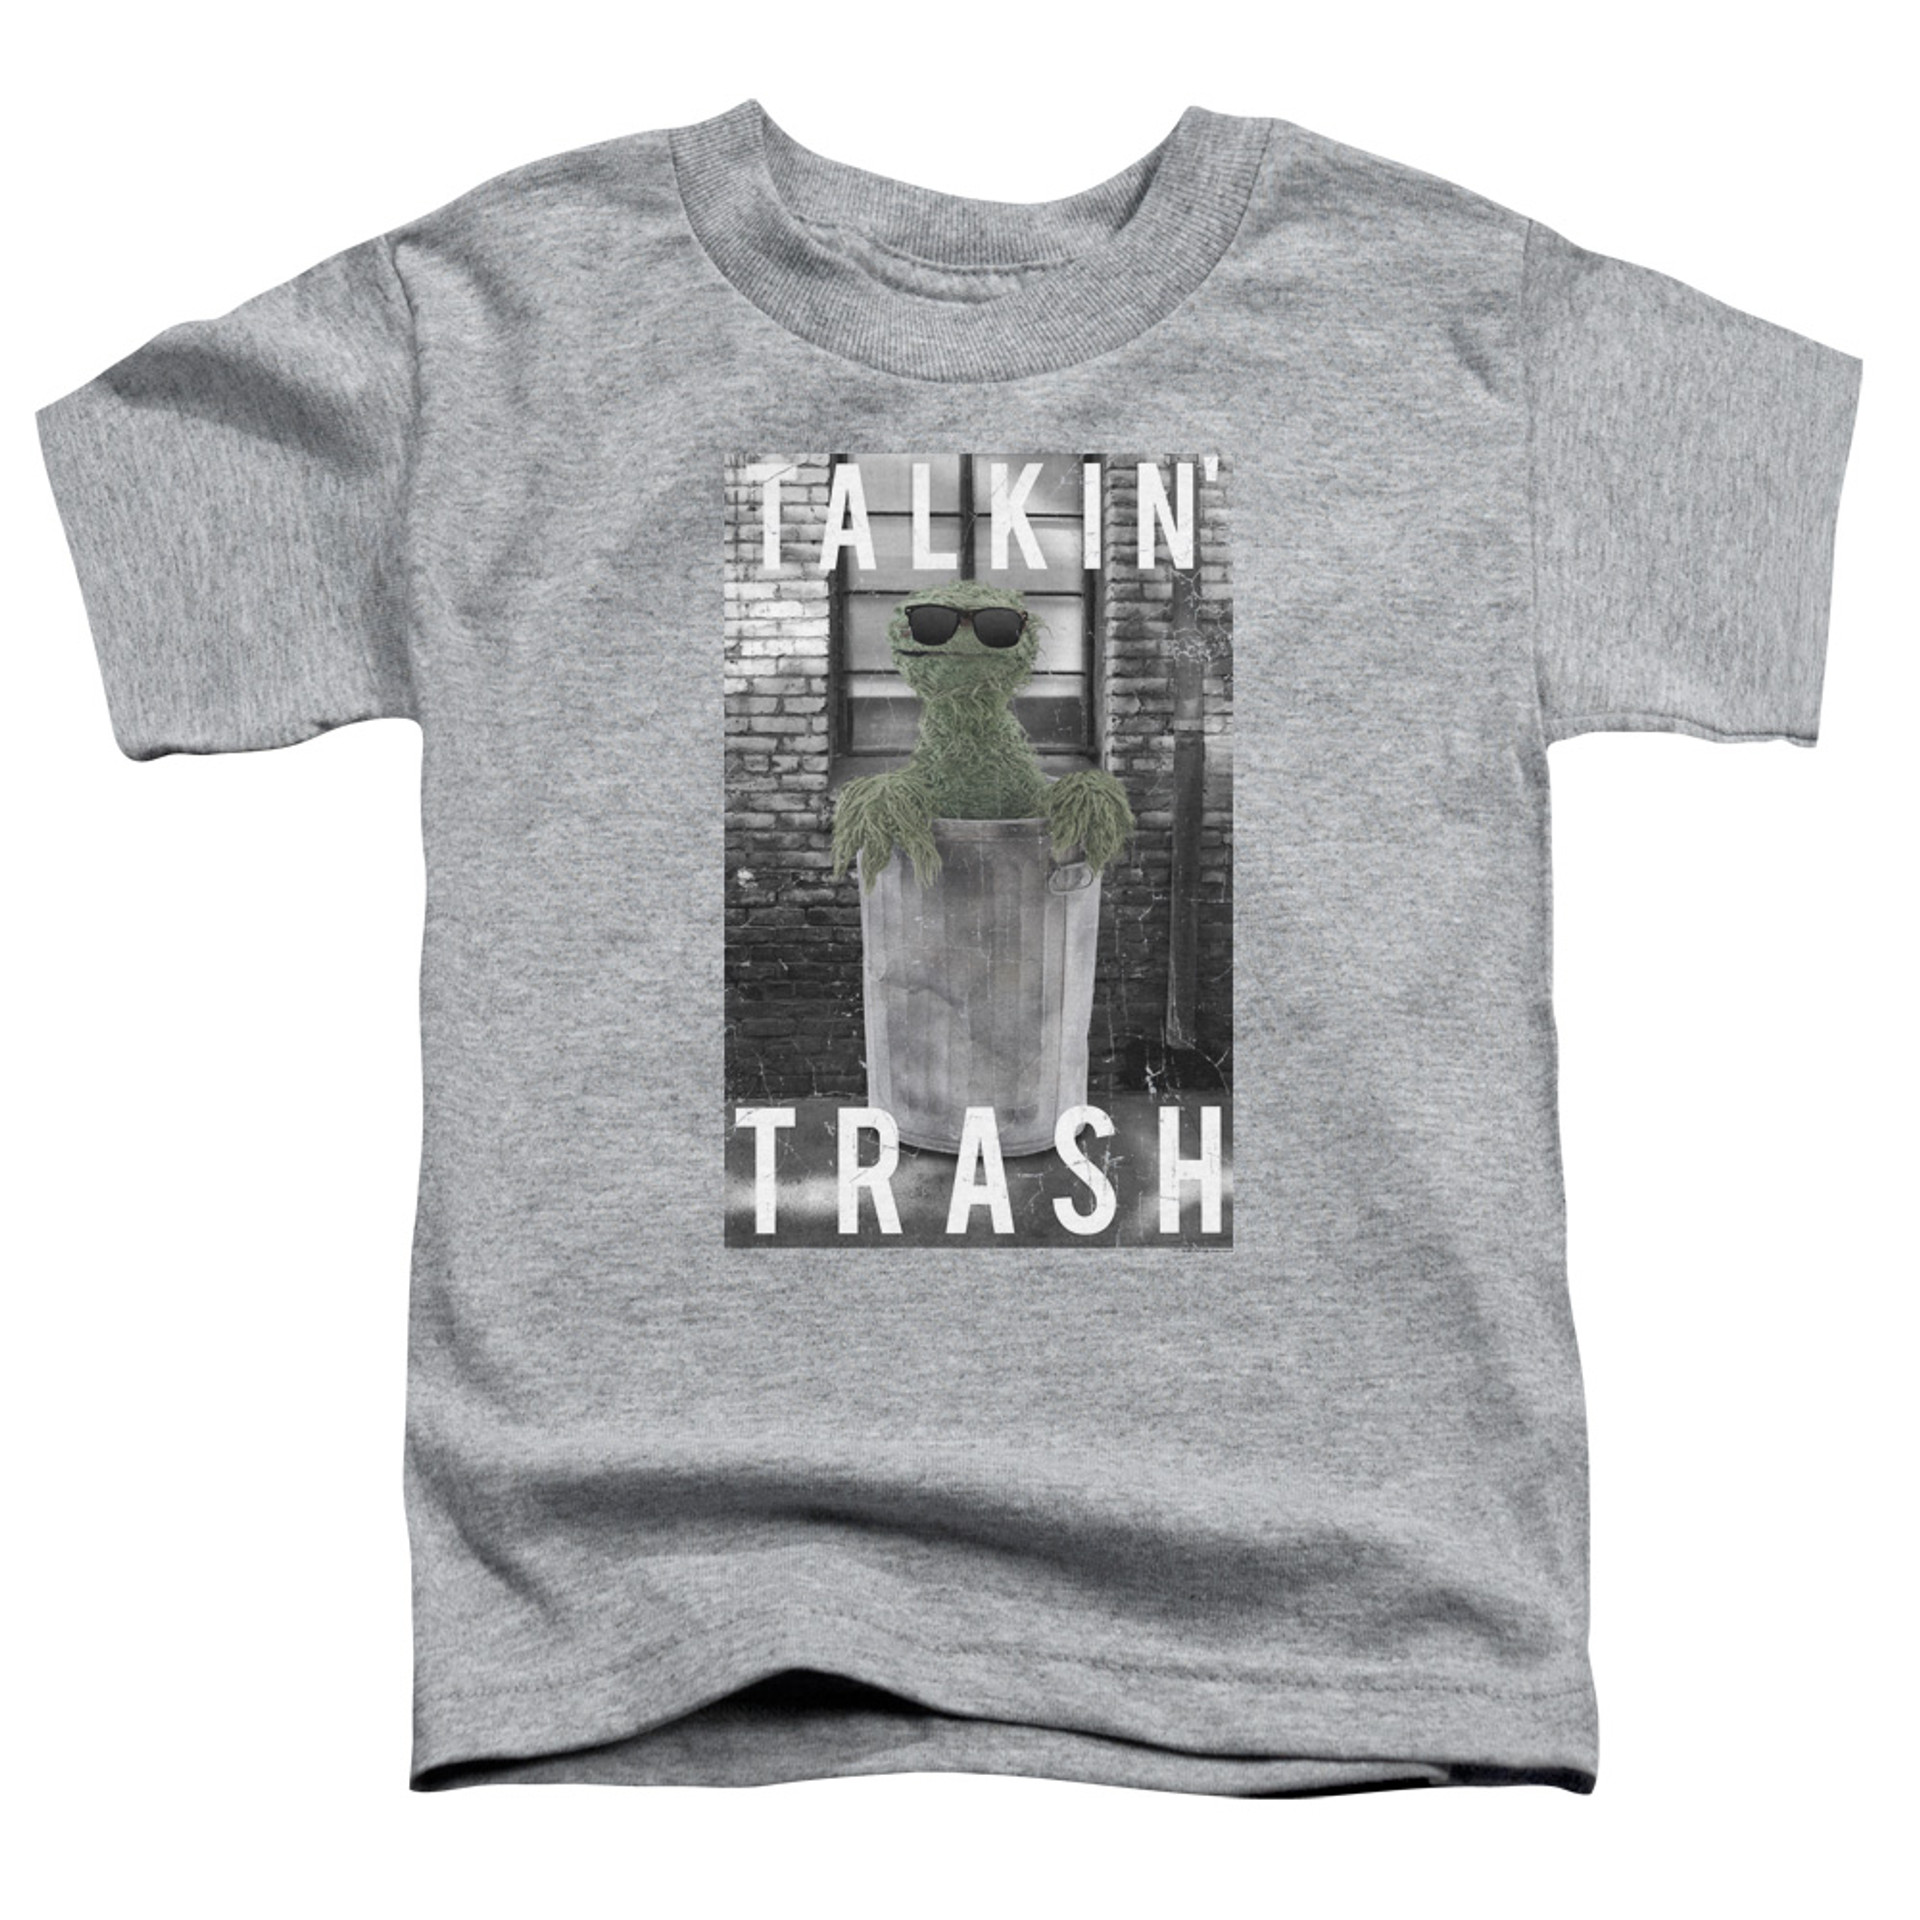 sesame street talkin trash t shirt athletic 4833